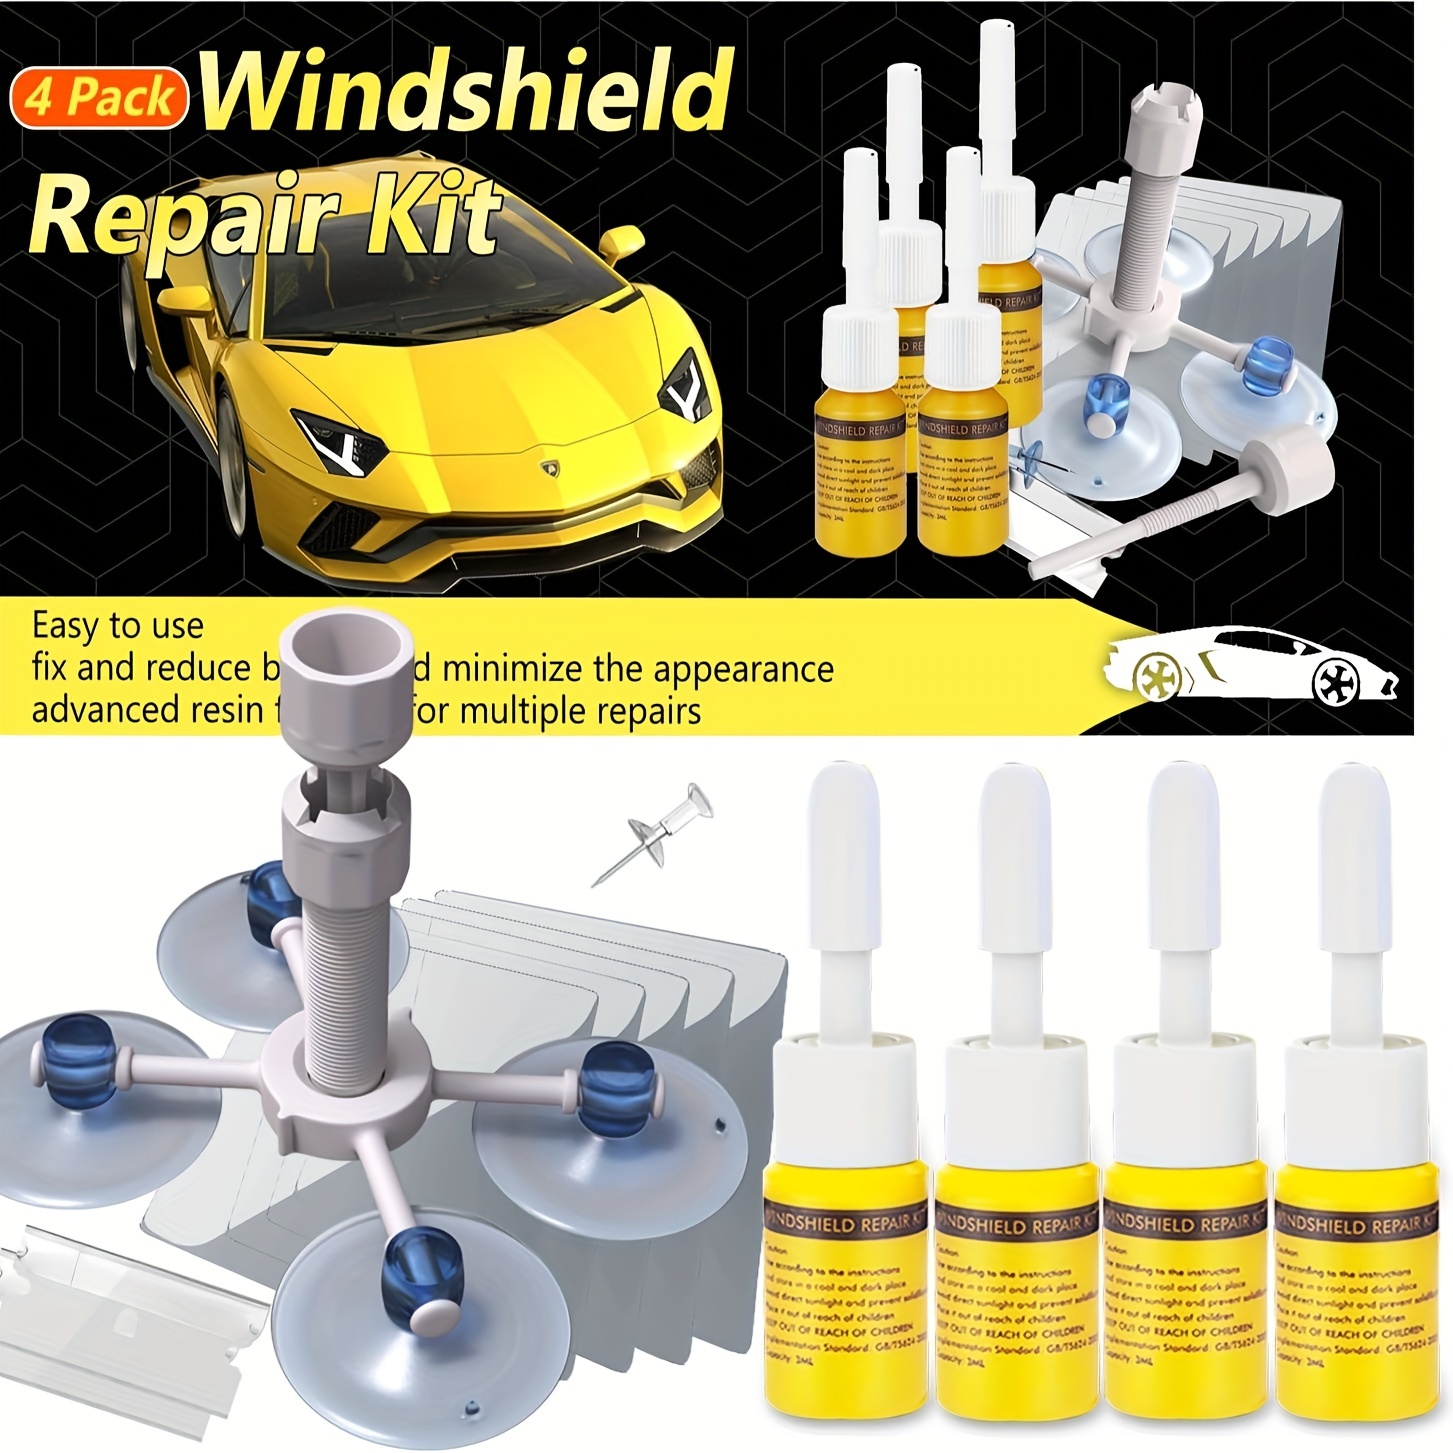 

Windshield Repair Kit, Nano Glass Repair Fluid 4 Pcs, Windshield Repair Kit For Chips And Cracks, Cracks Gone Glass Repair Kit Automotive Quick Fix For Chips, Cracks, Star-shaped, -eye